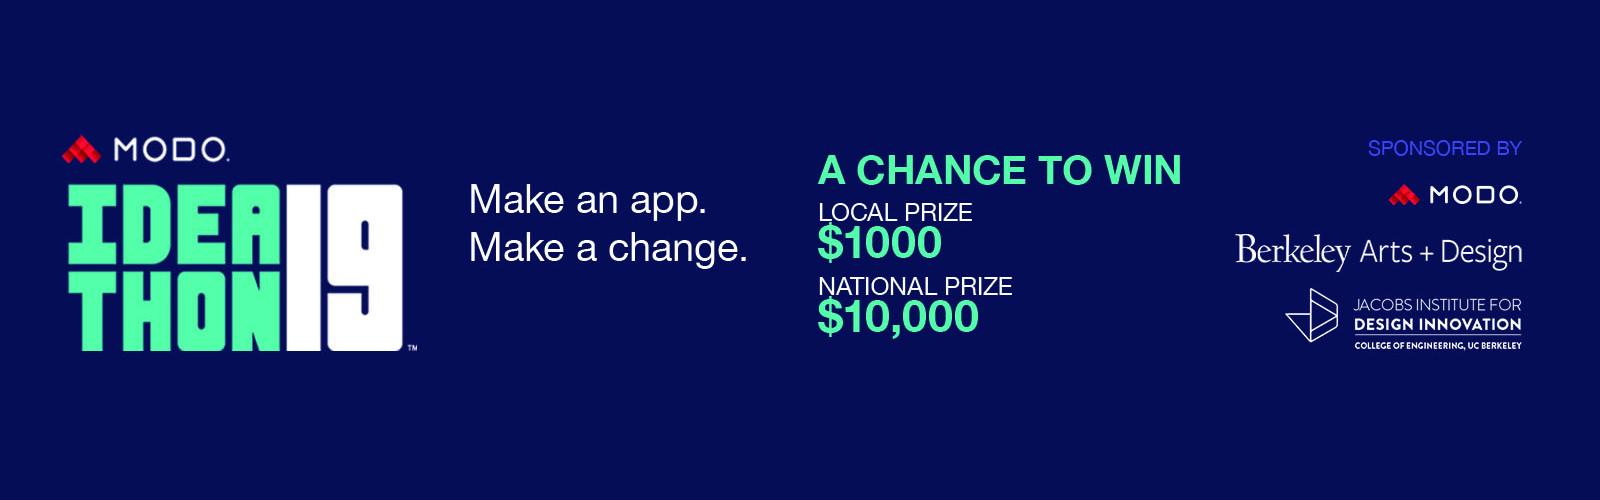 Modo Ideathon. Make an app. Make a Change. A Chance to Win $1000 (Local) $10000 (National)